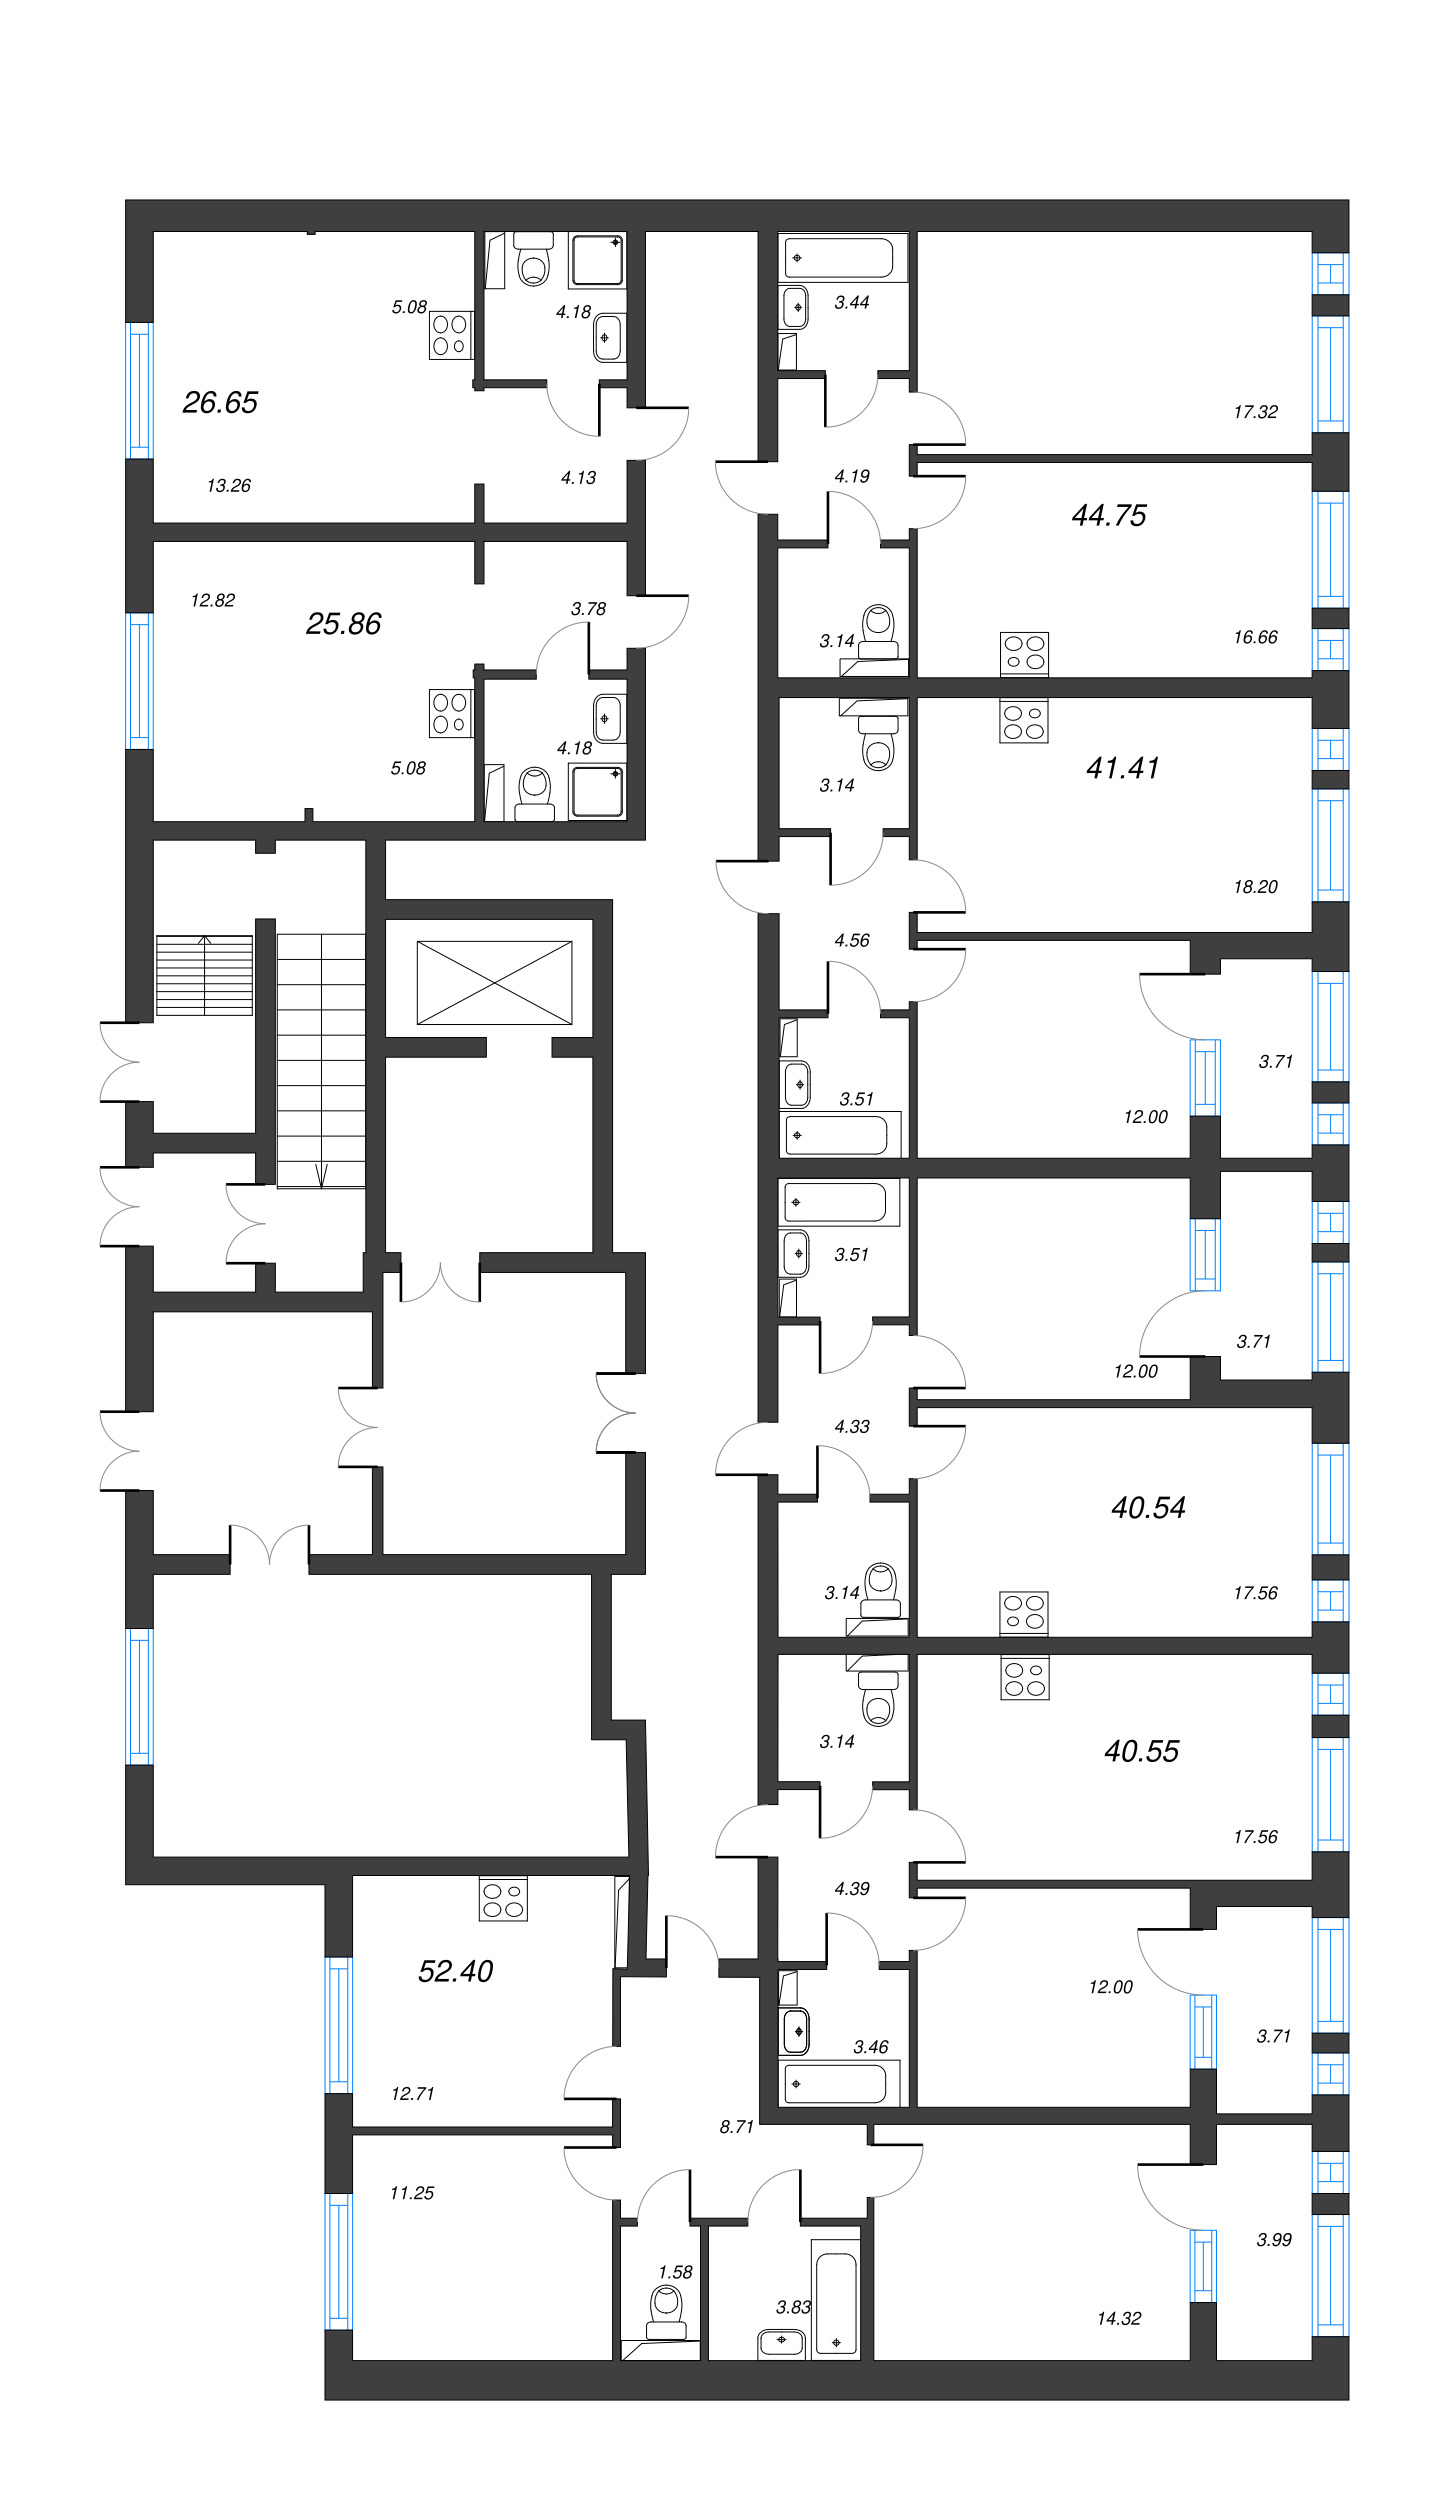 2-комнатная (Евро) квартира, 42.4 м² - планировка этажа